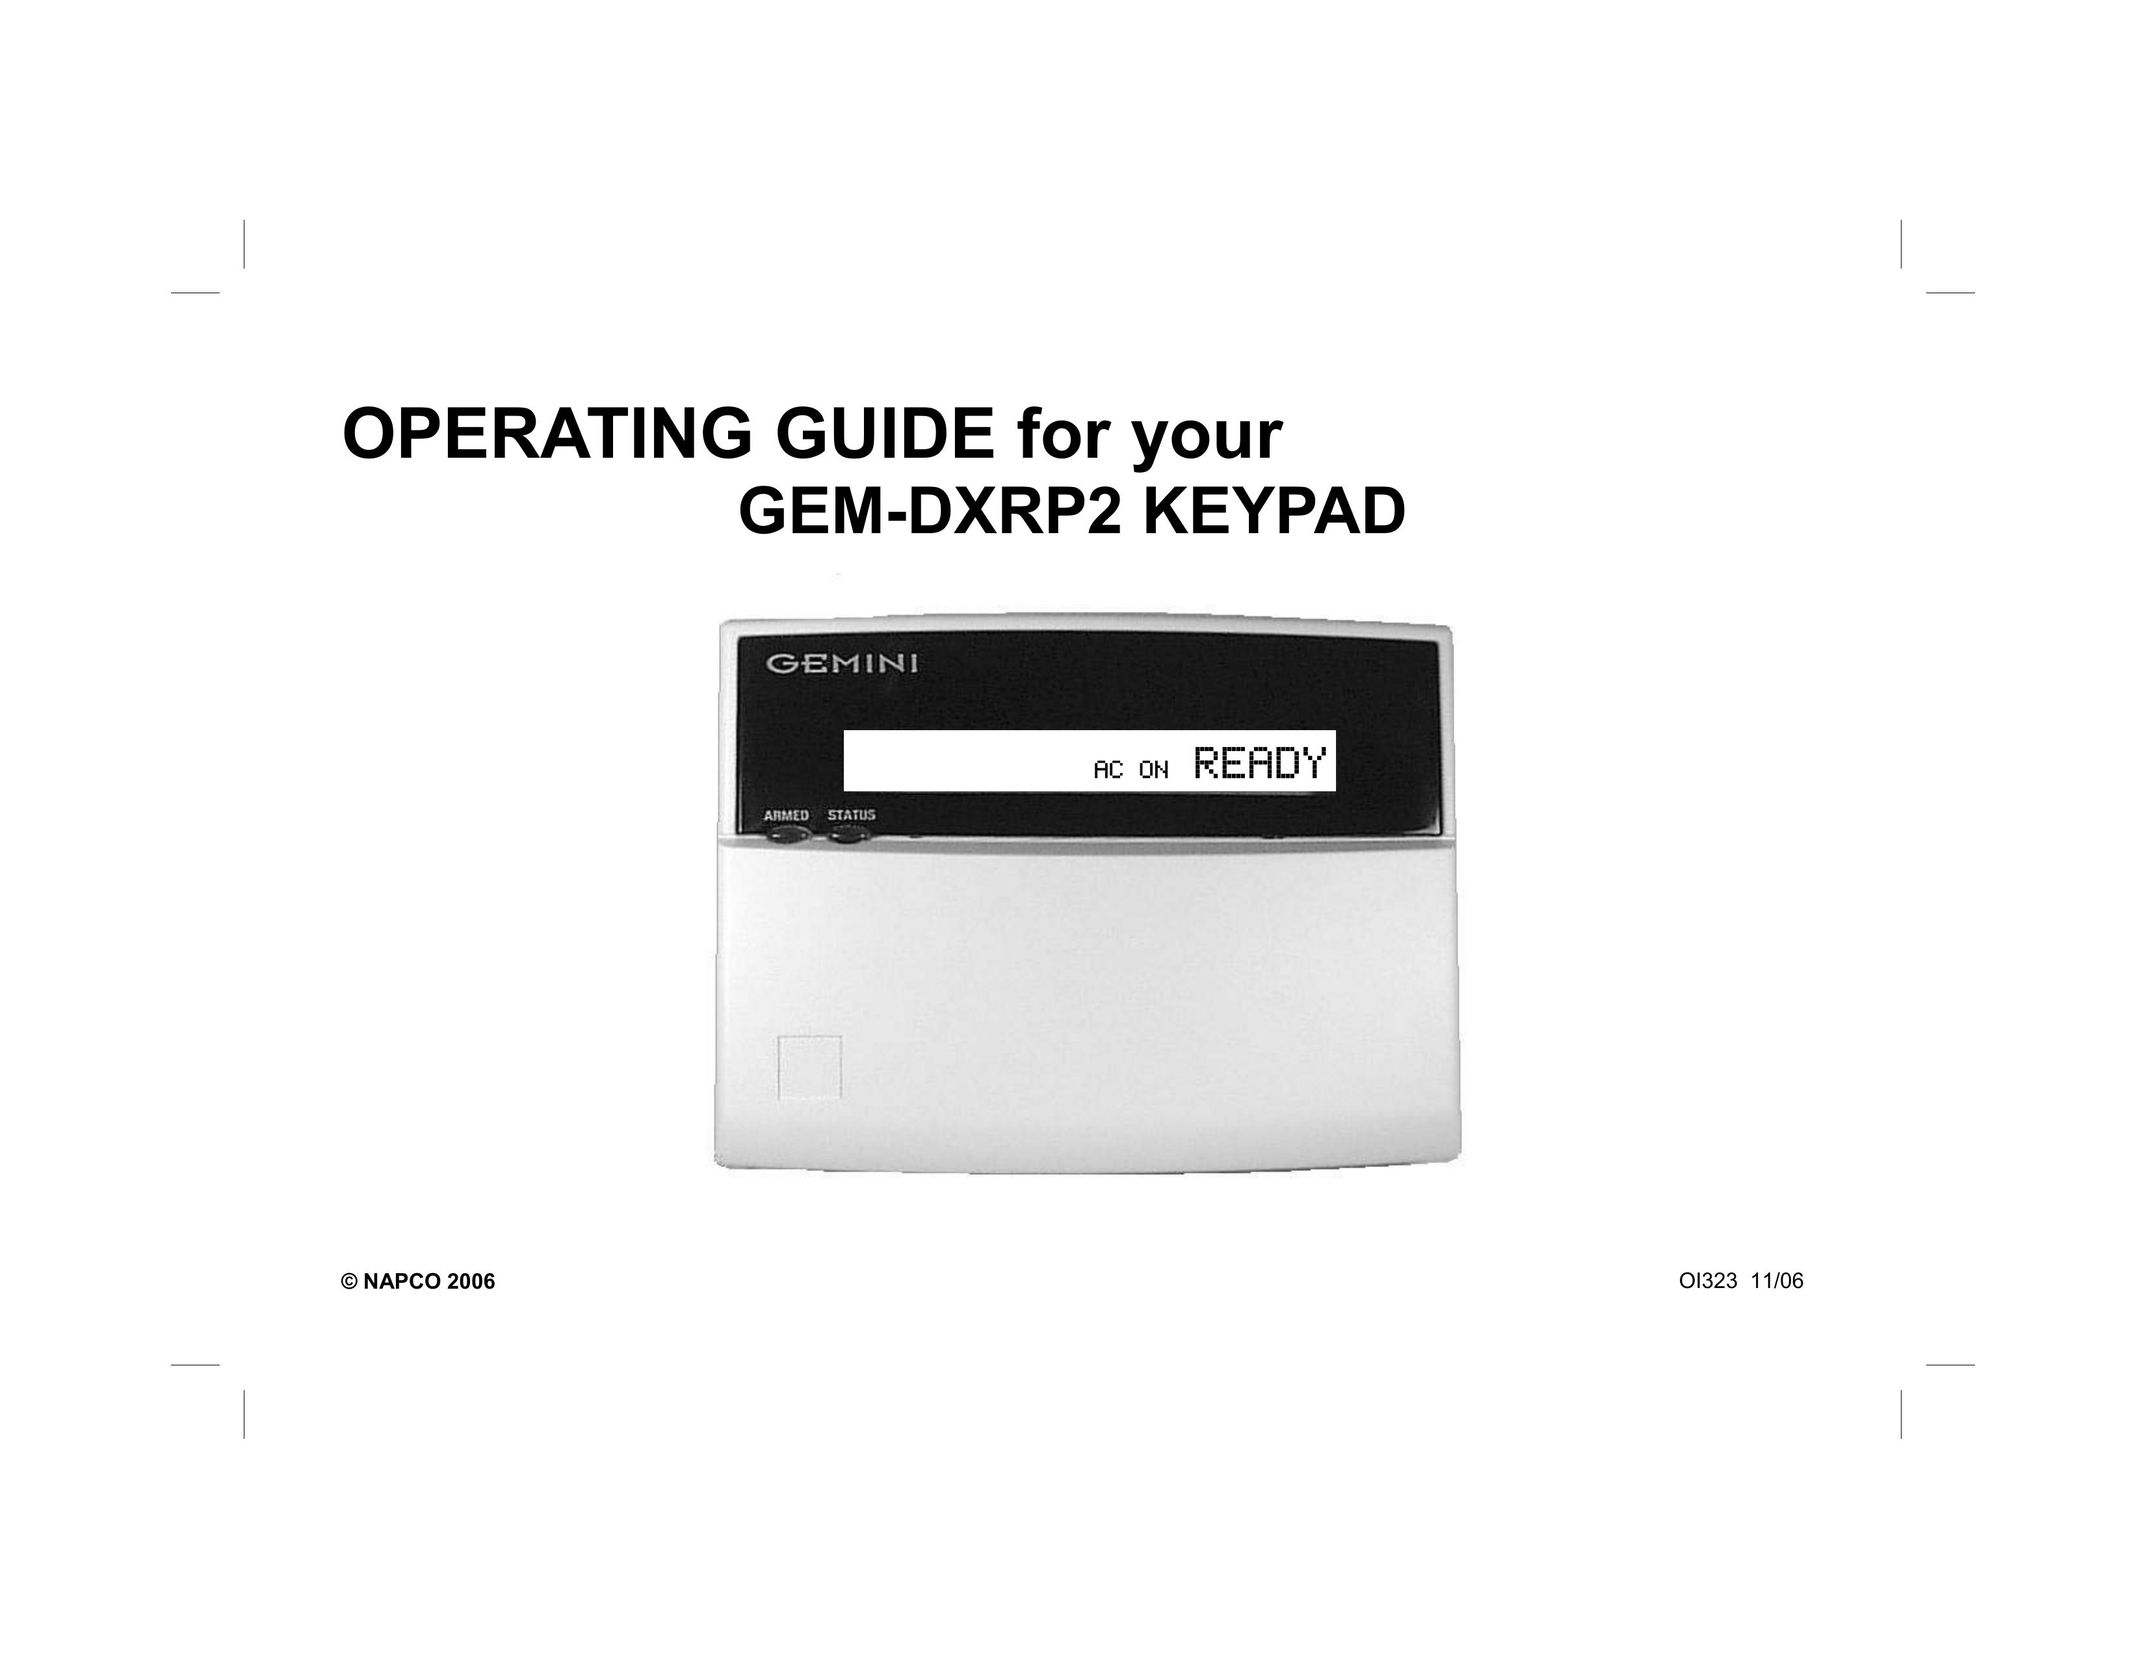 Napco Security Technologies GEM-DXRP2 Computer Hardware User Manual